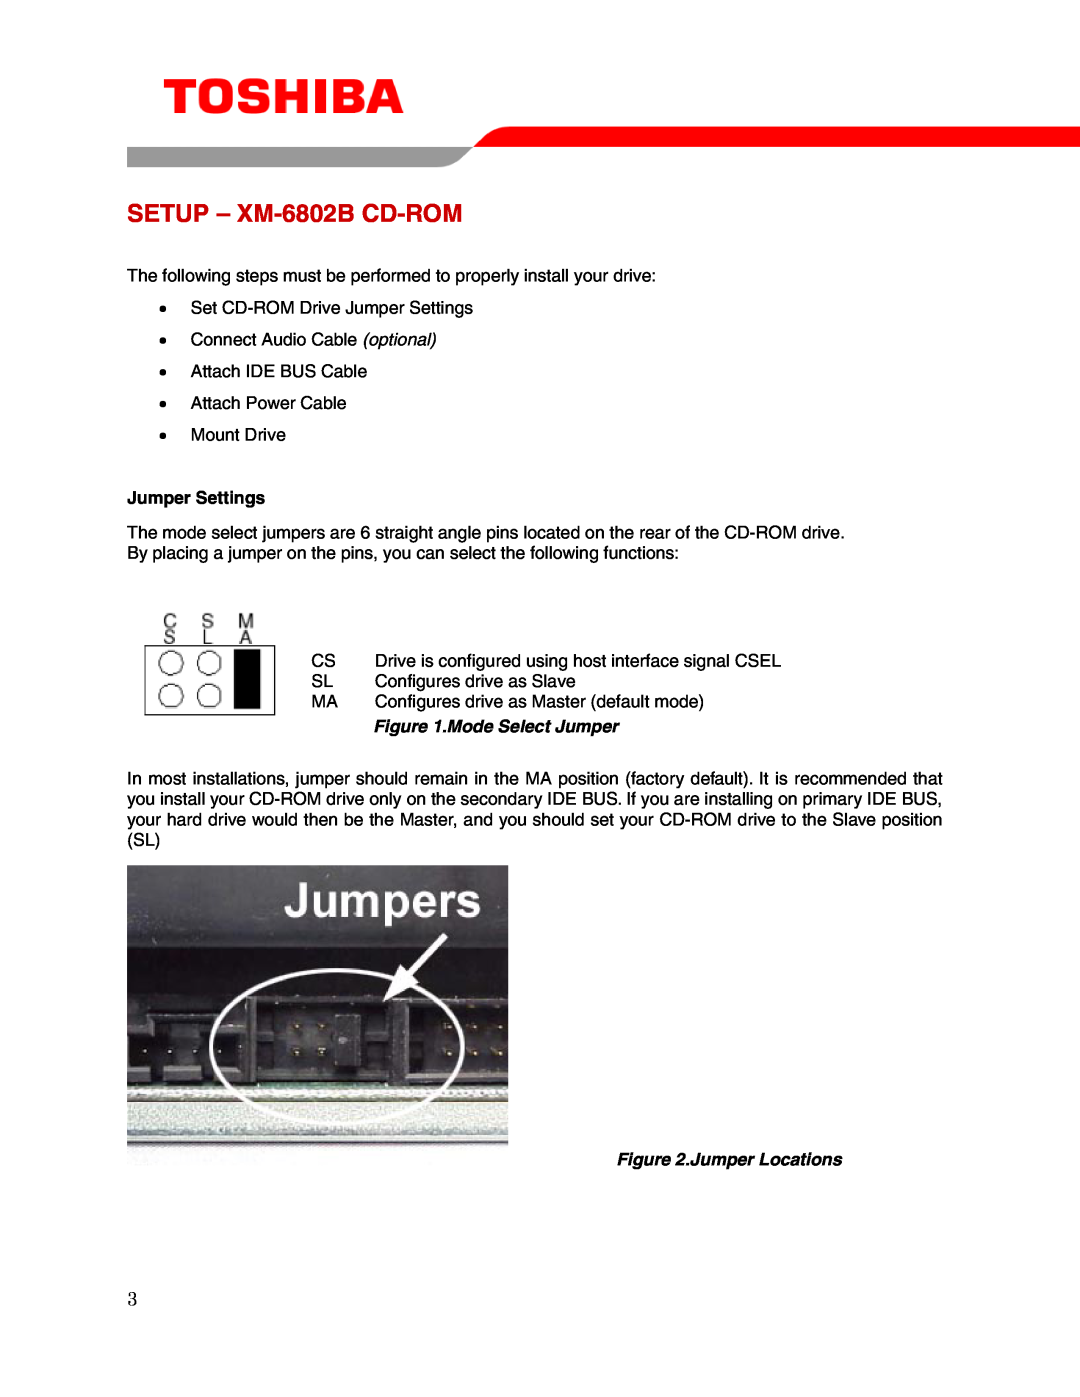 Toshiba user manual SETUP - XM-6802B CD-ROM, Jumper Settings, Mode Select Jumper, Jumper Locations 